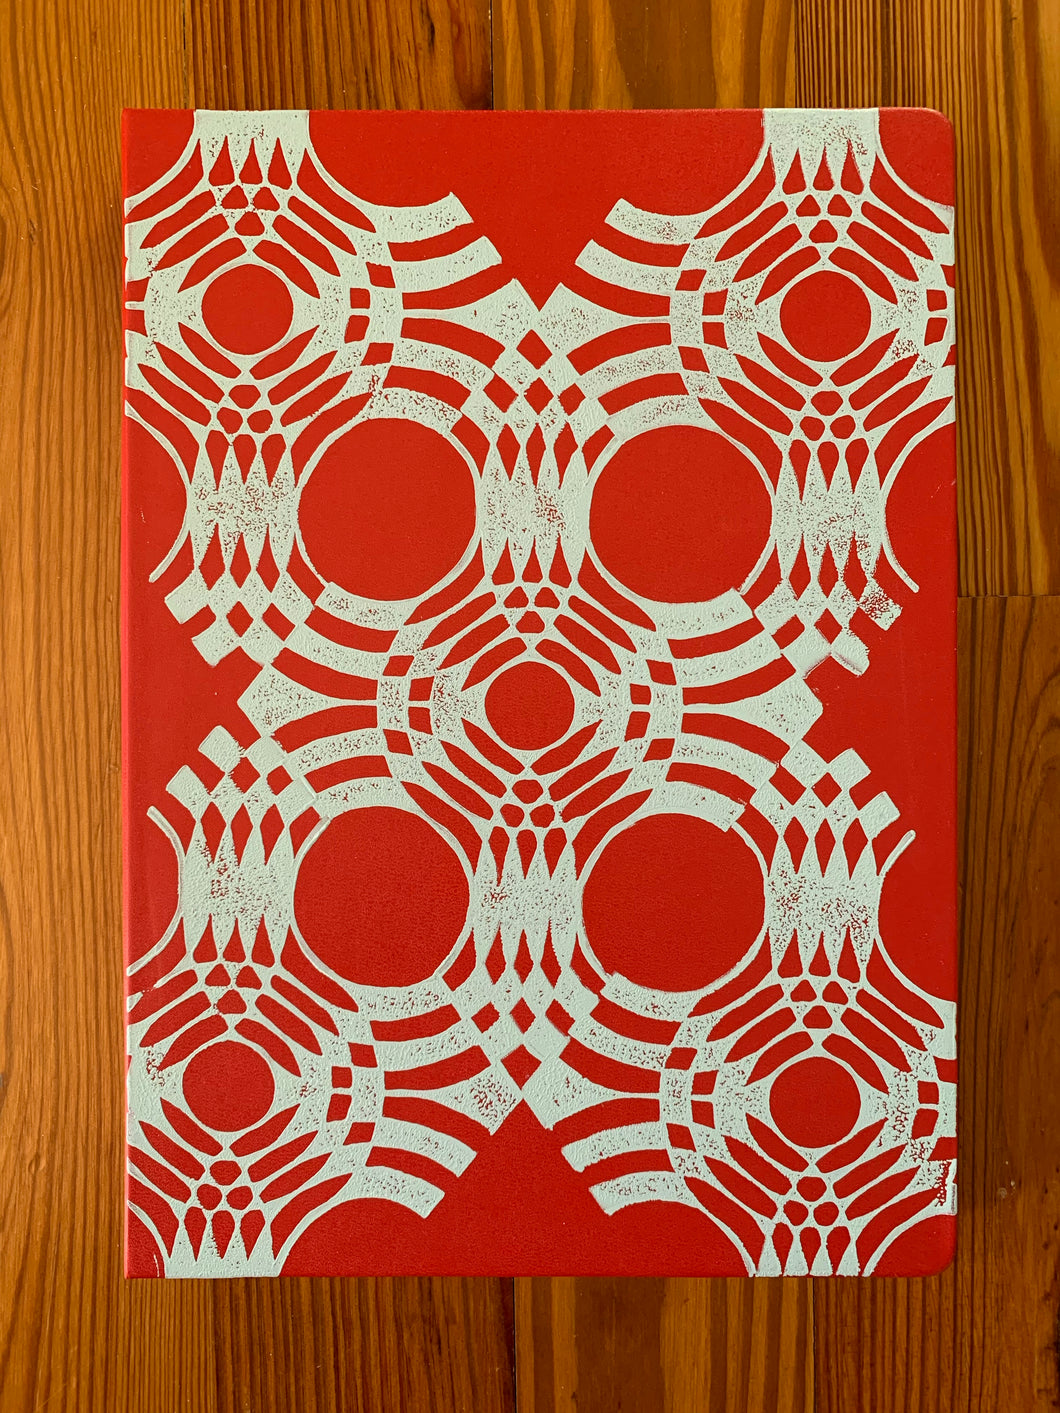 A red Moleskine sketchbook hand block printed in a white geometric pattern.